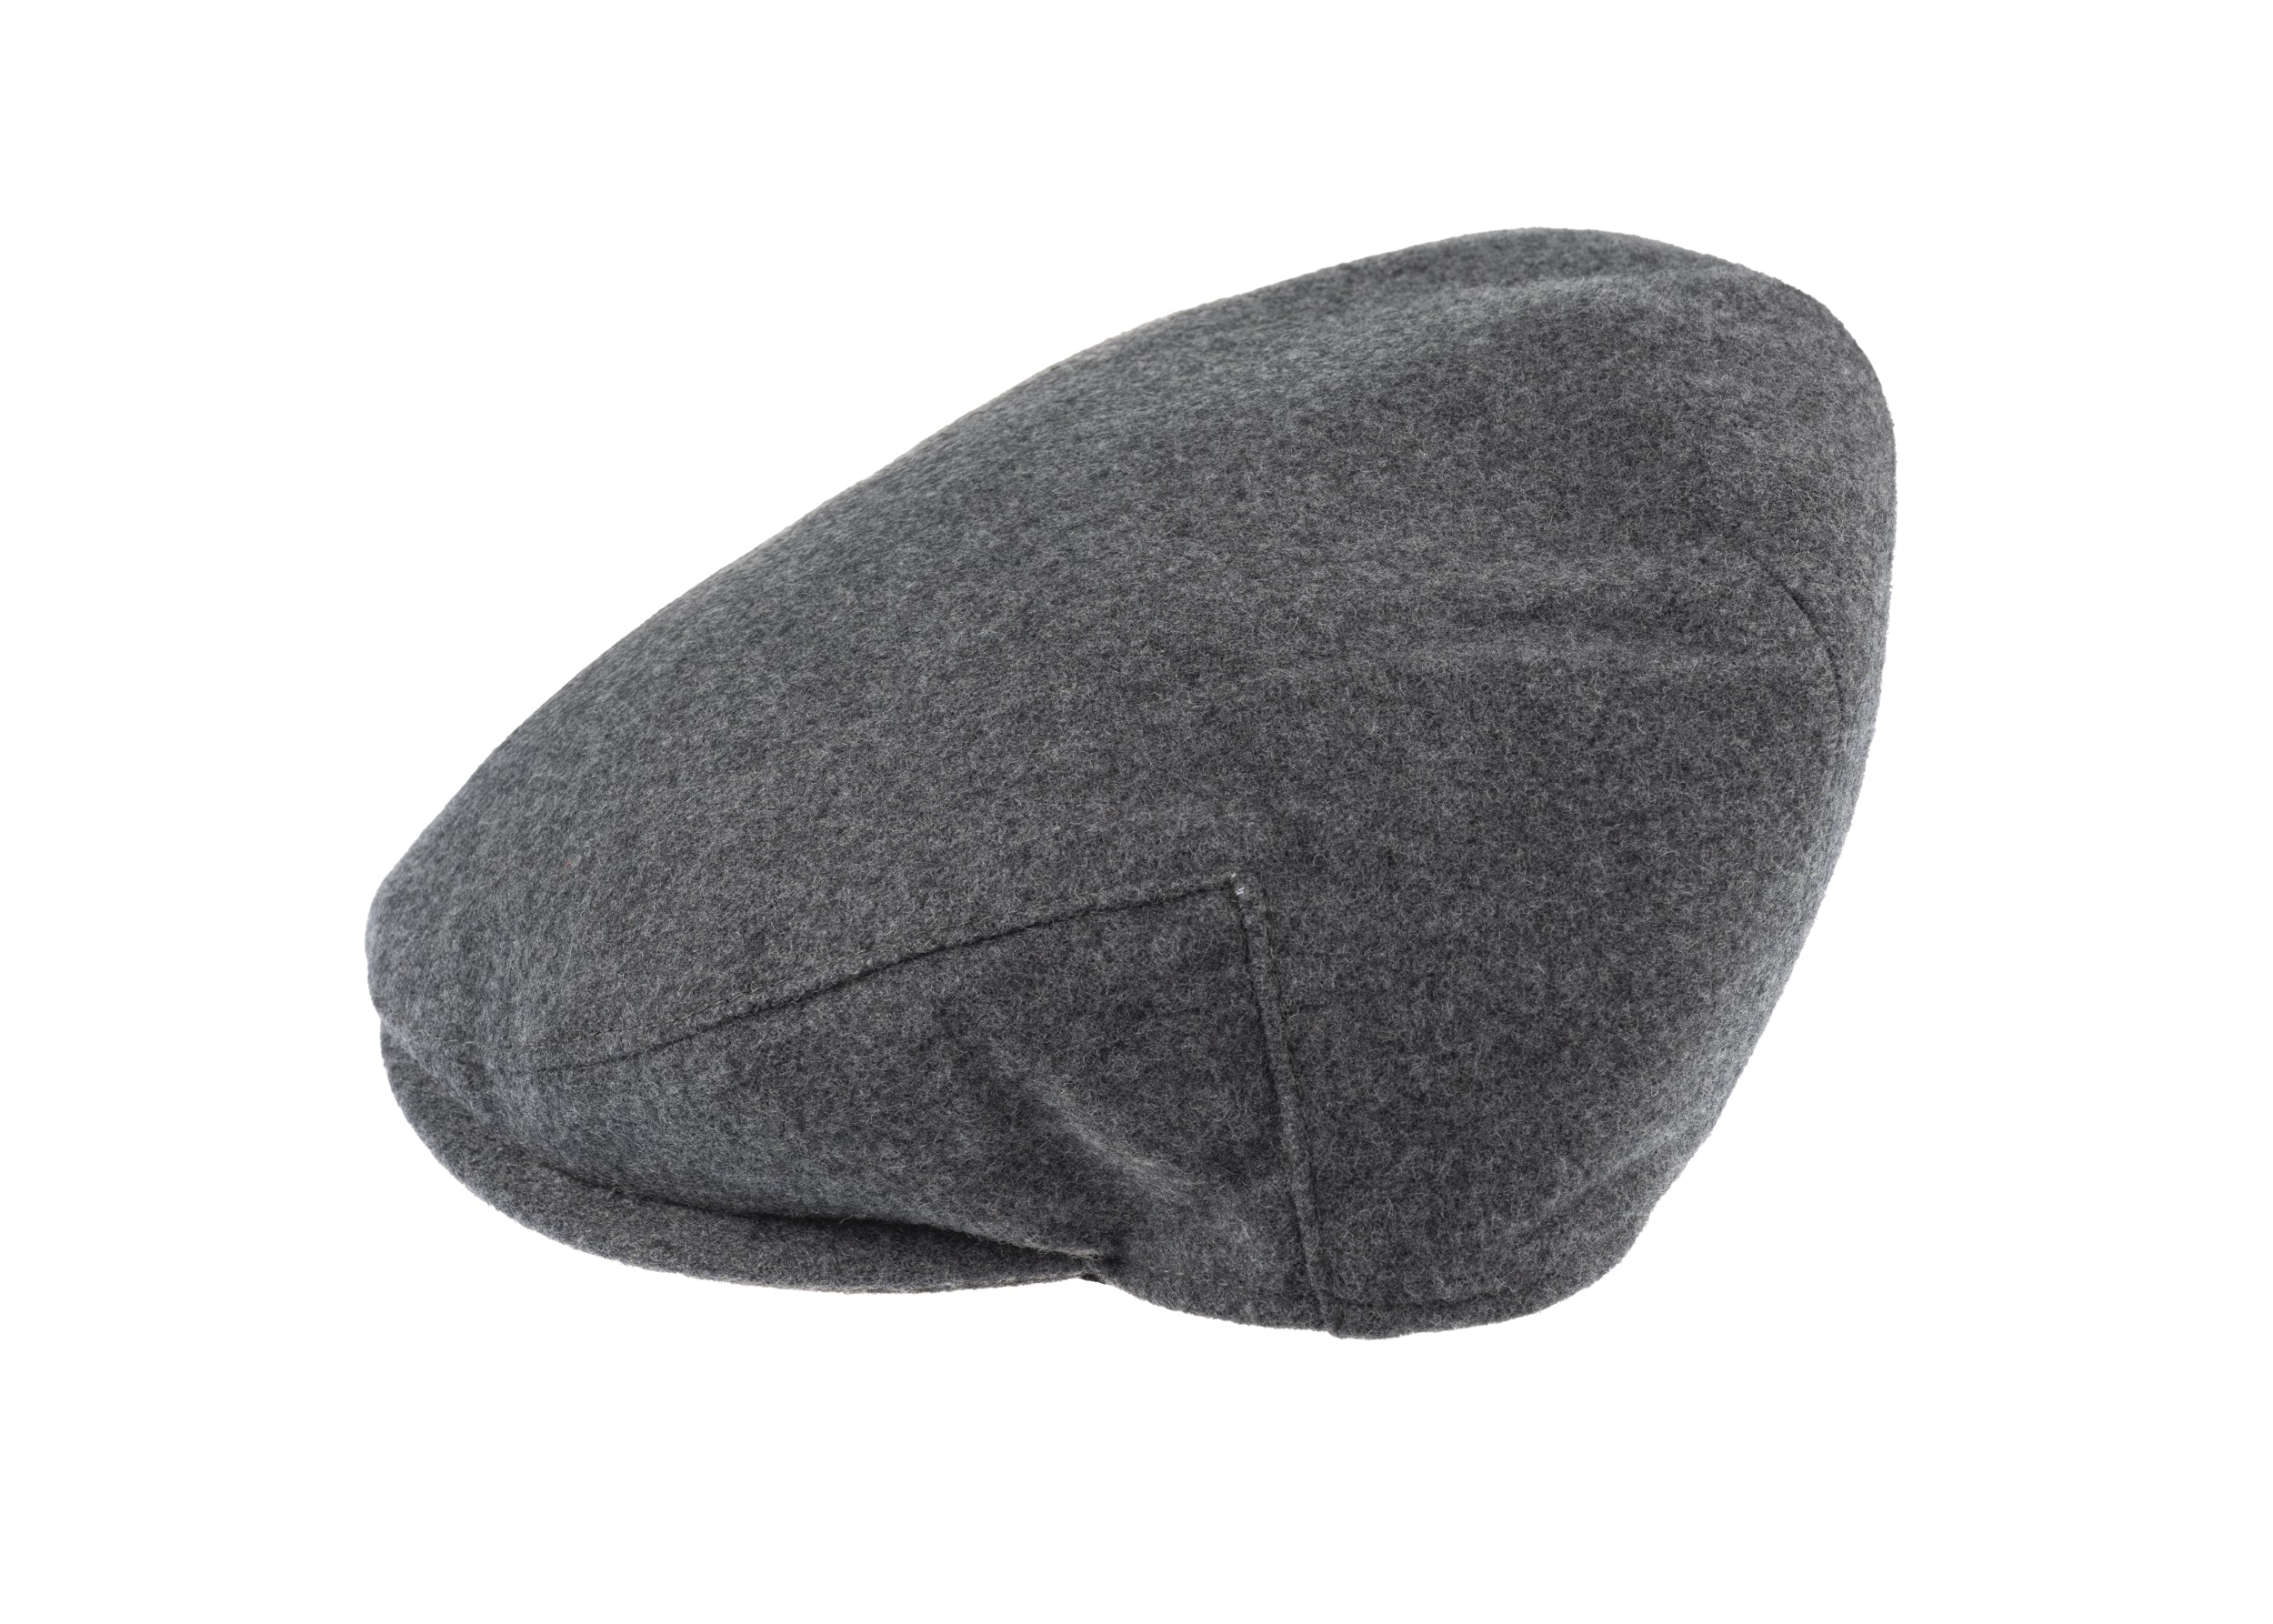 Josh balmoral flat cap in cashmere/wool blend fabric in Grey